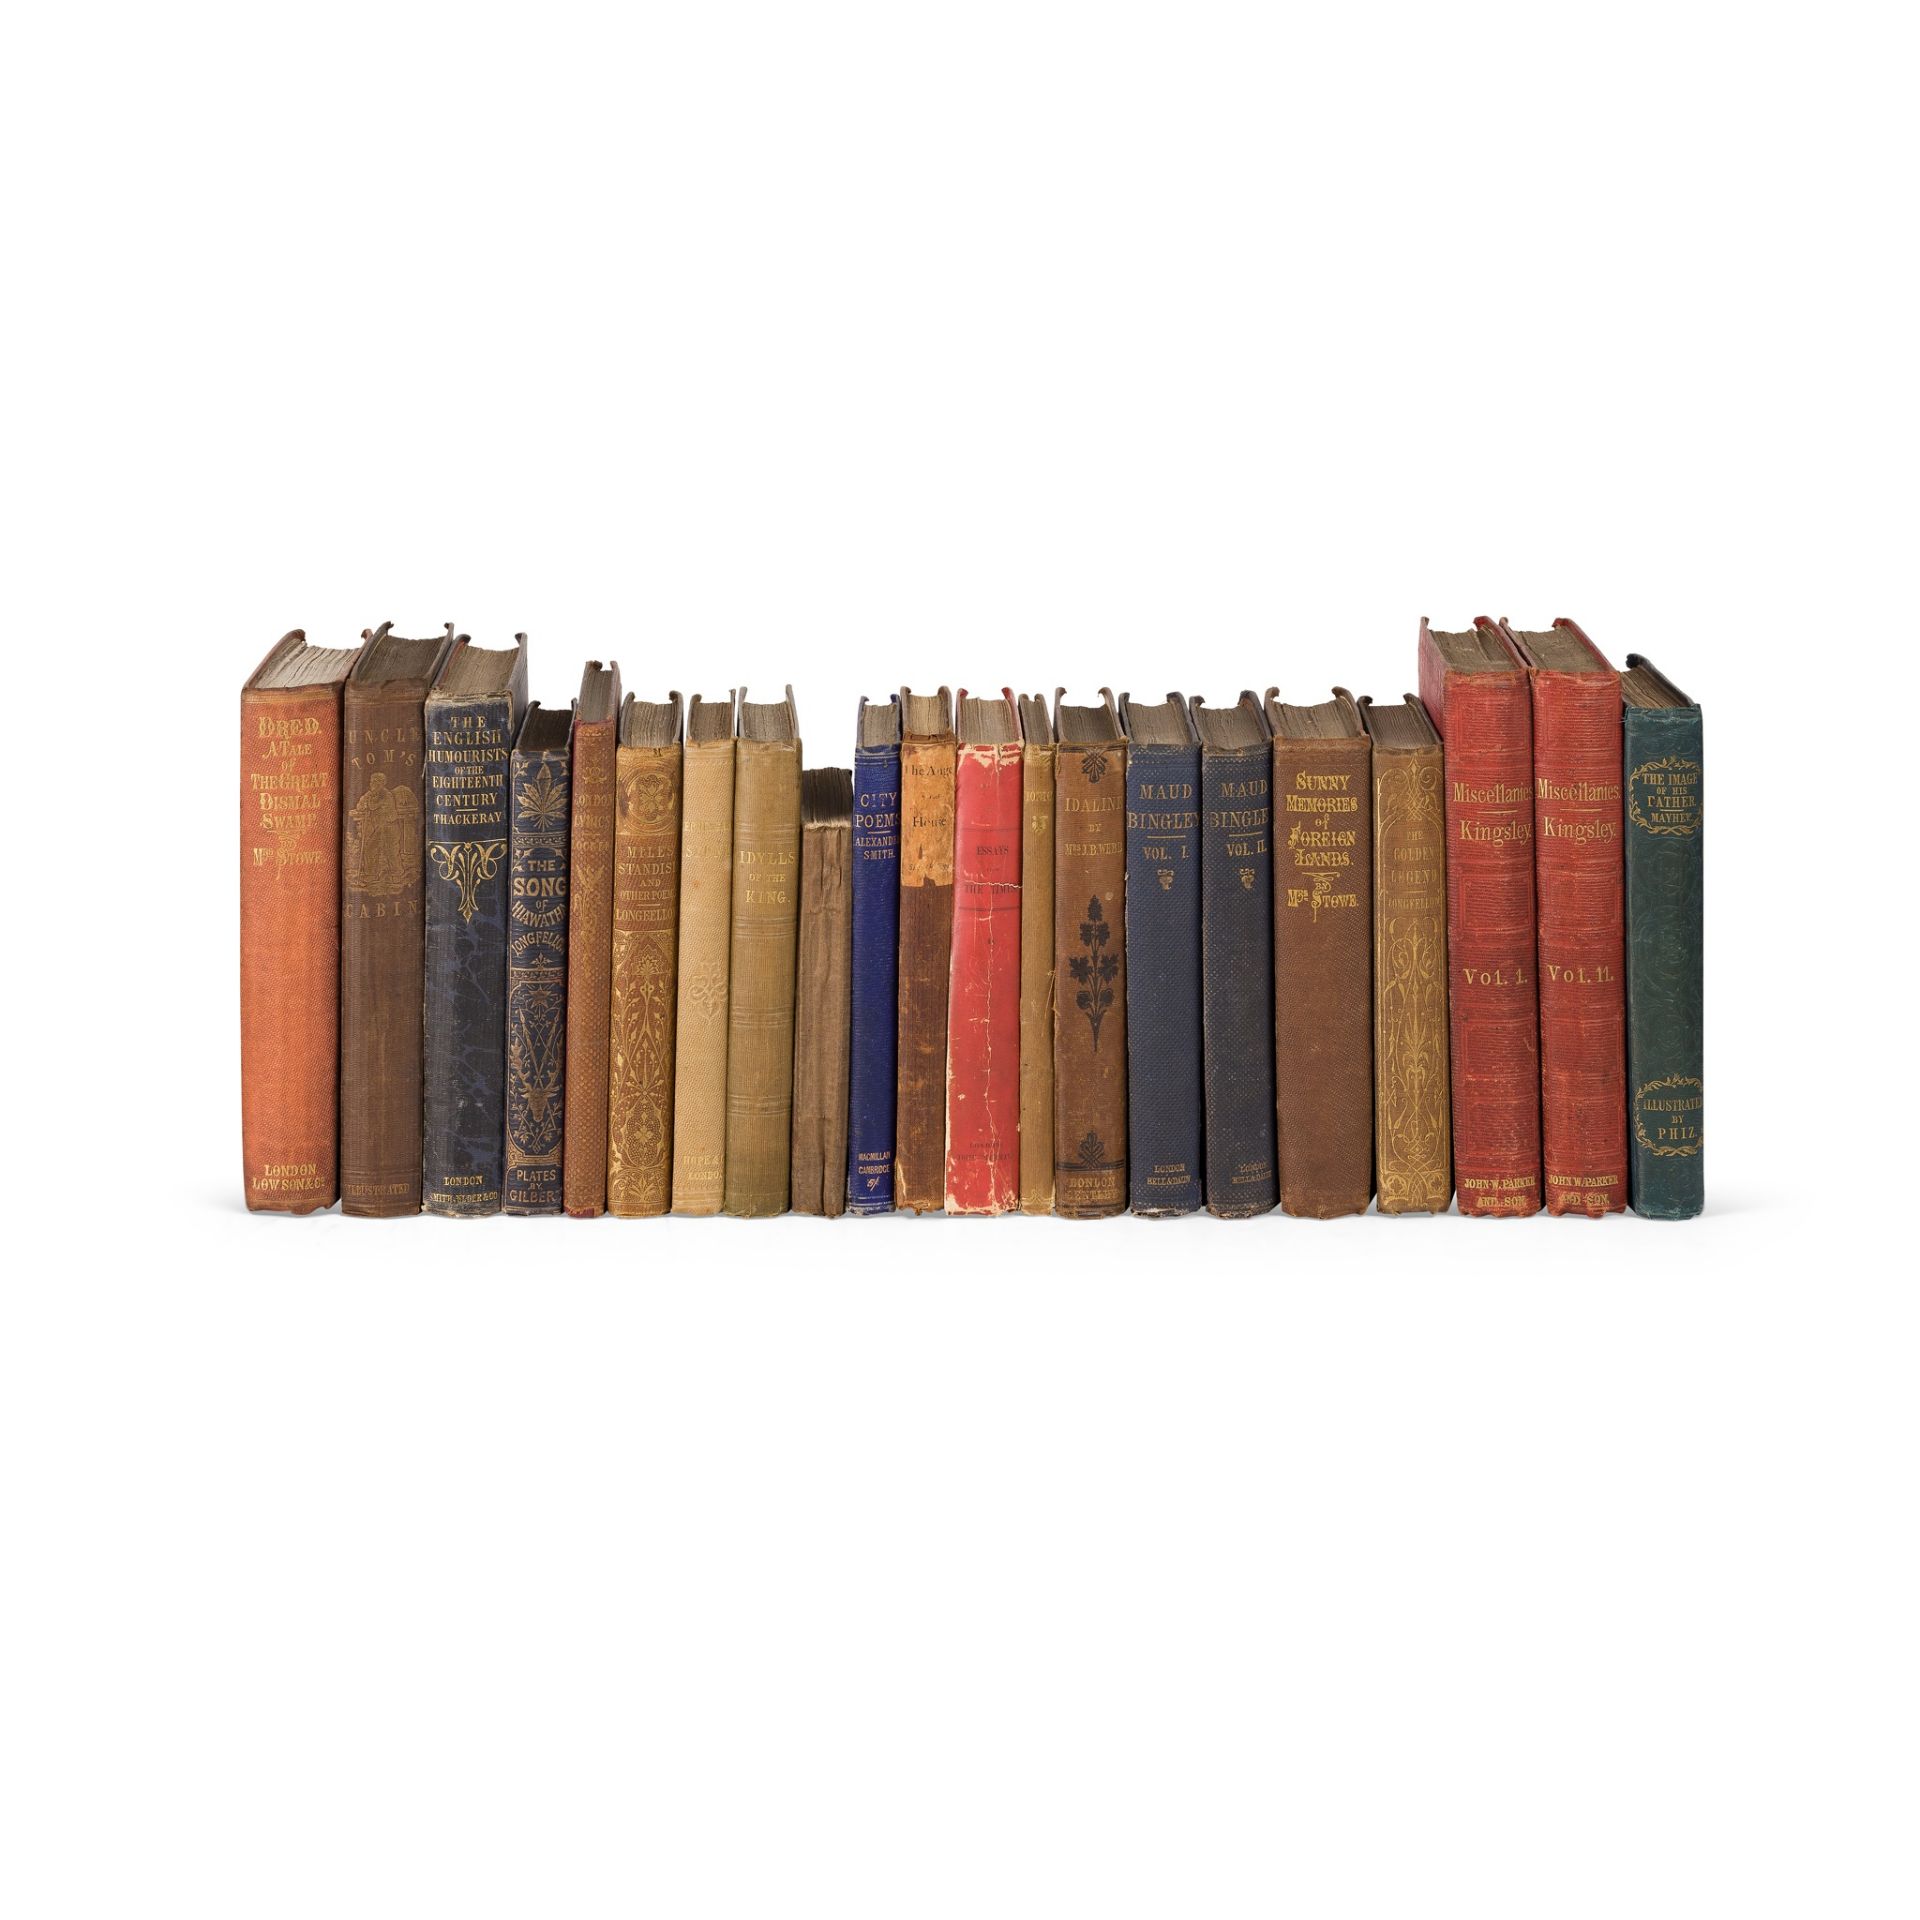 1850's Literature 21 volumes, including